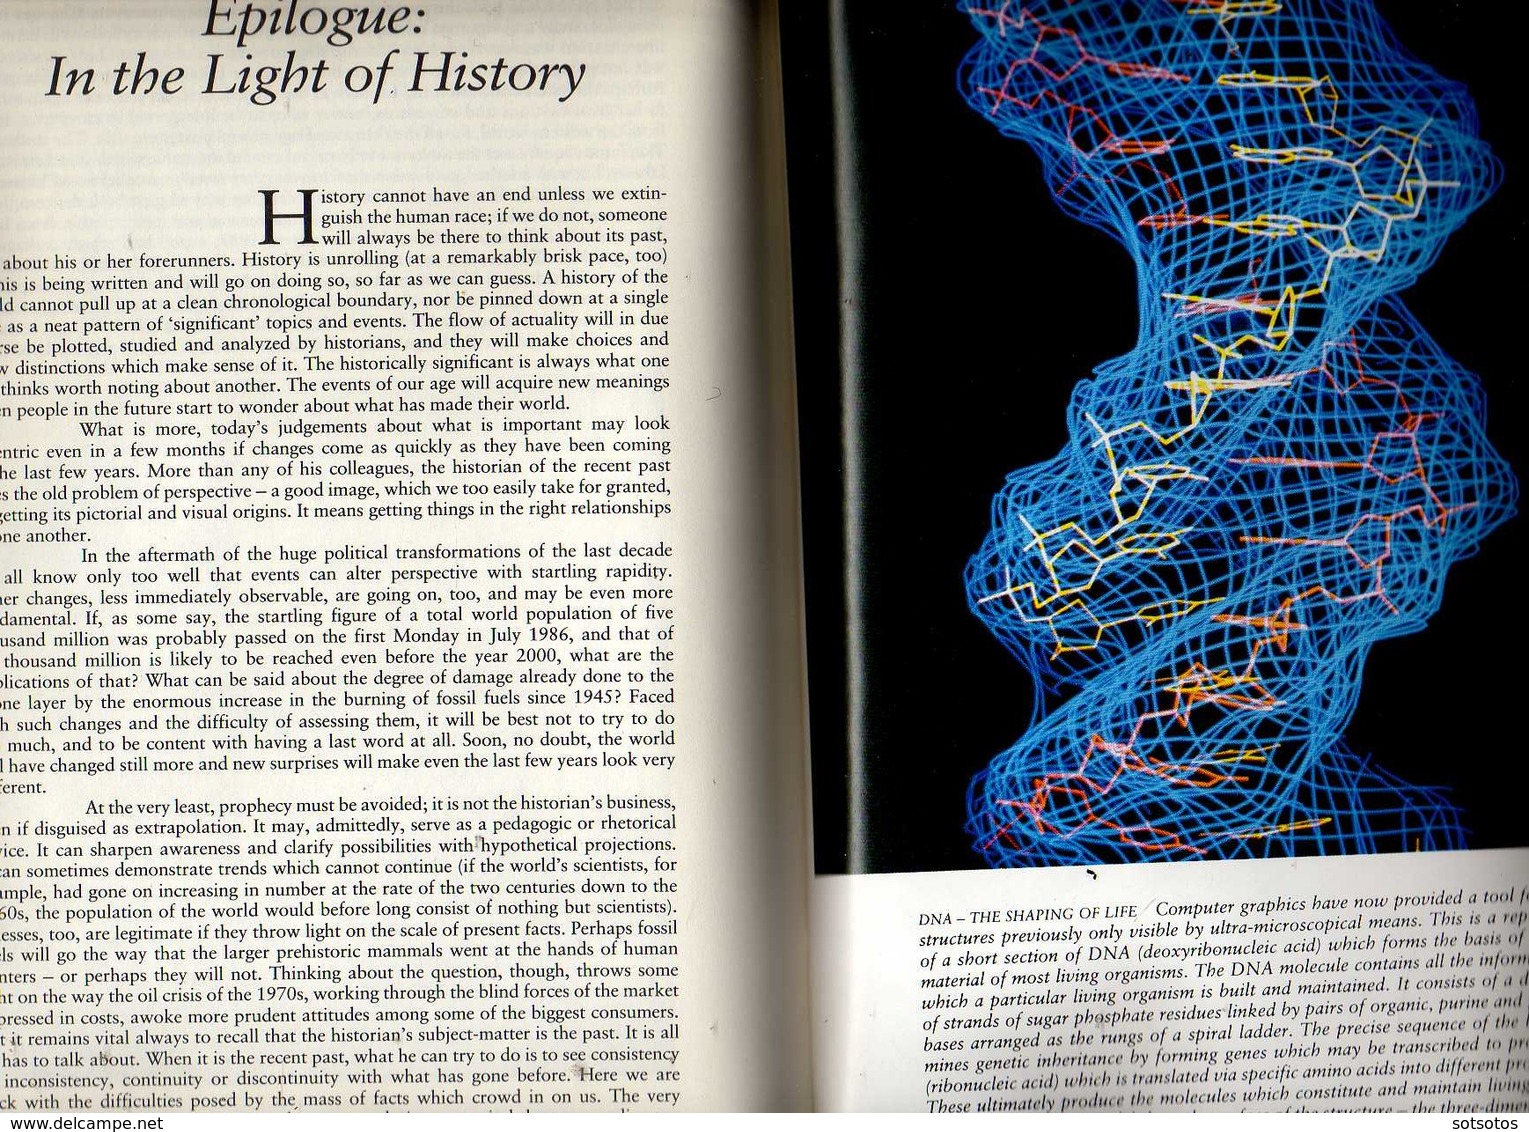 HISTORY of theWORLD, J.M. ROBERTS, Ed. OXFORD UNIVERSITY PRESS, New York 1993 - many illustrations